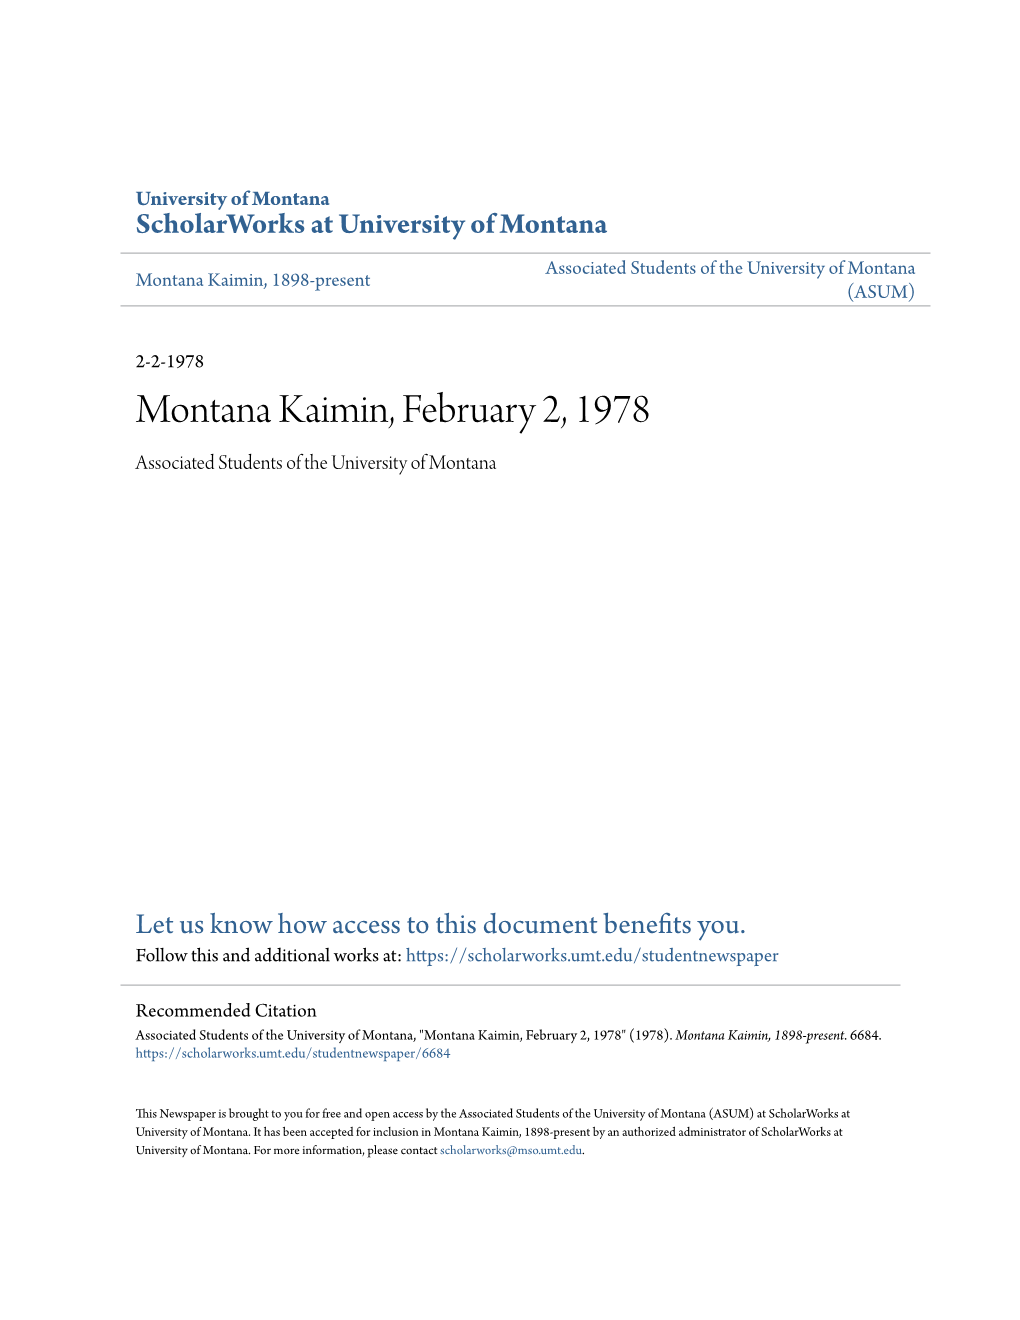 Montana Kaimin, February 2, 1978 Associated Students of the University of Montana